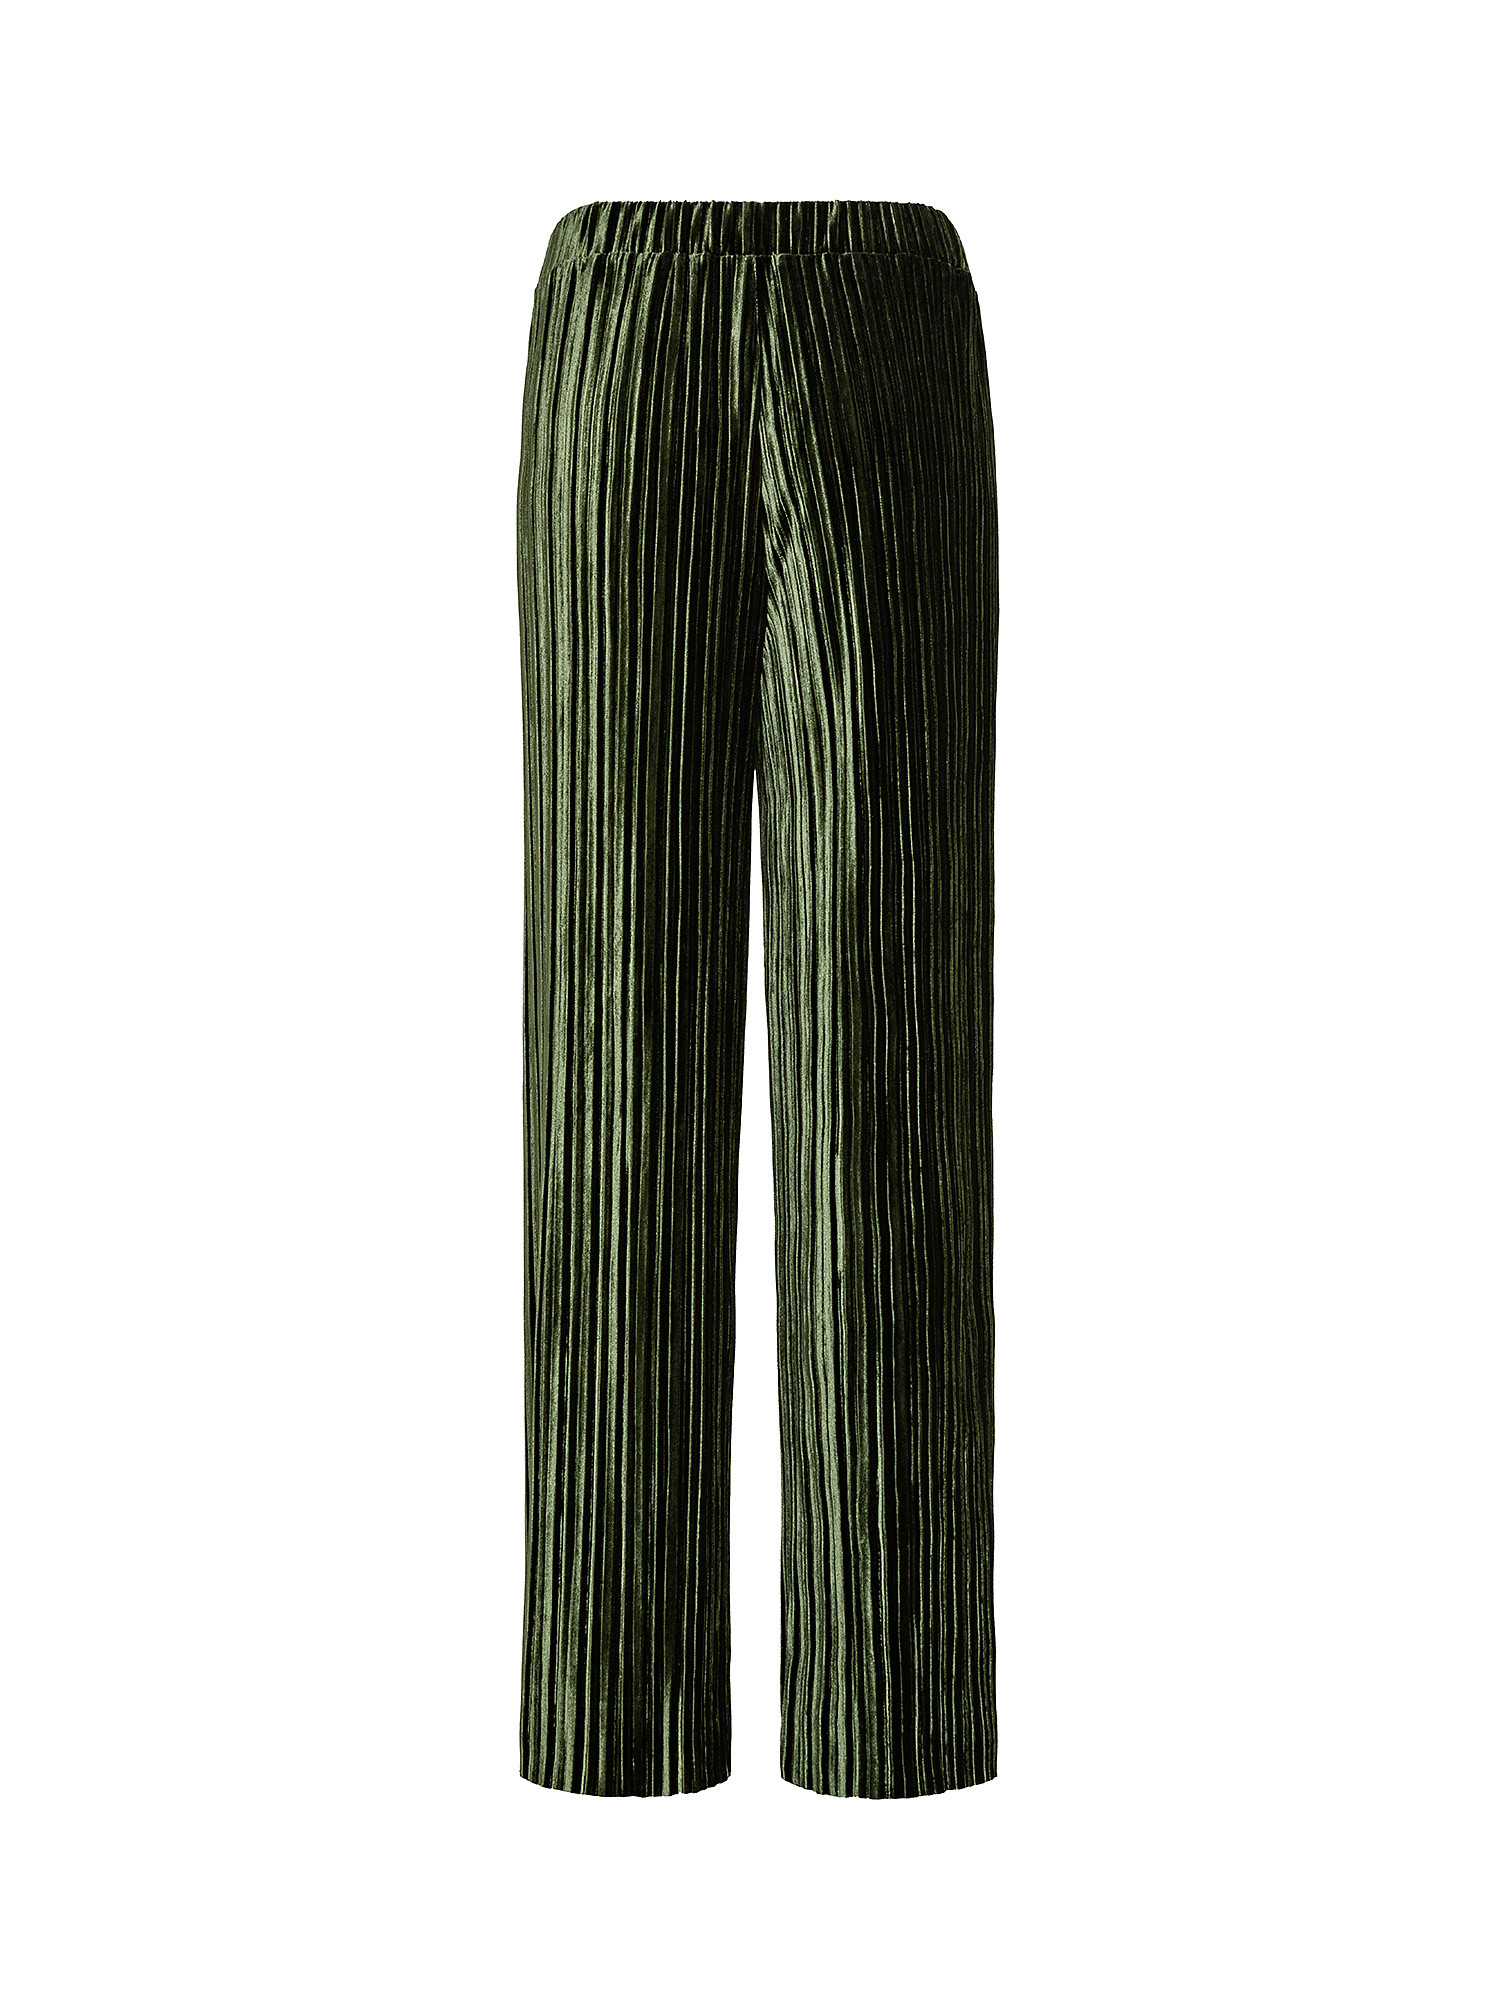 Pantalone in velour plissà©, Verde, large image number 1